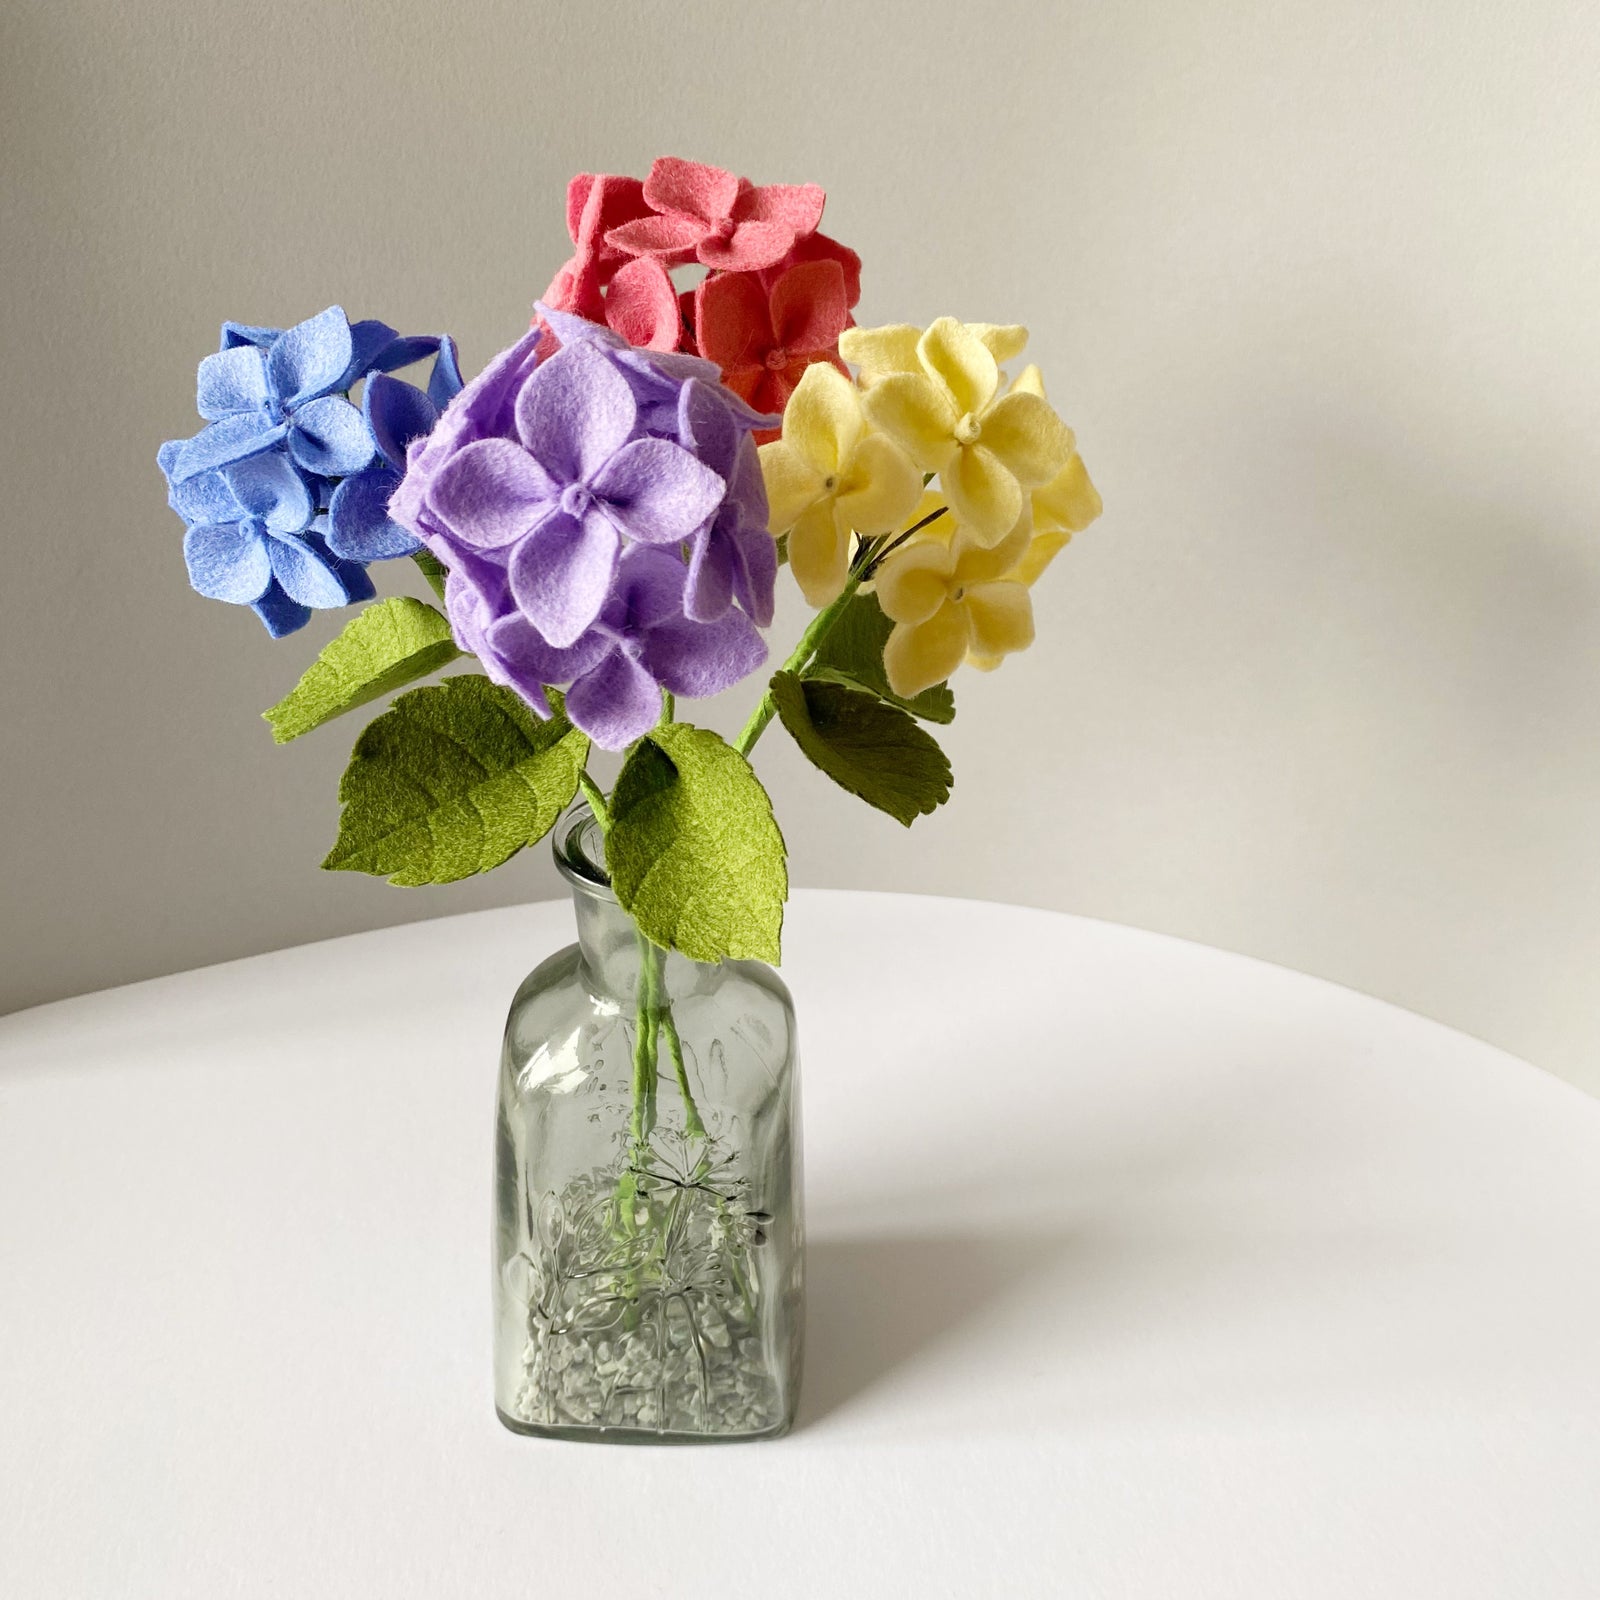 Learn to make felt hydrangea flowers with The Handmade Florist